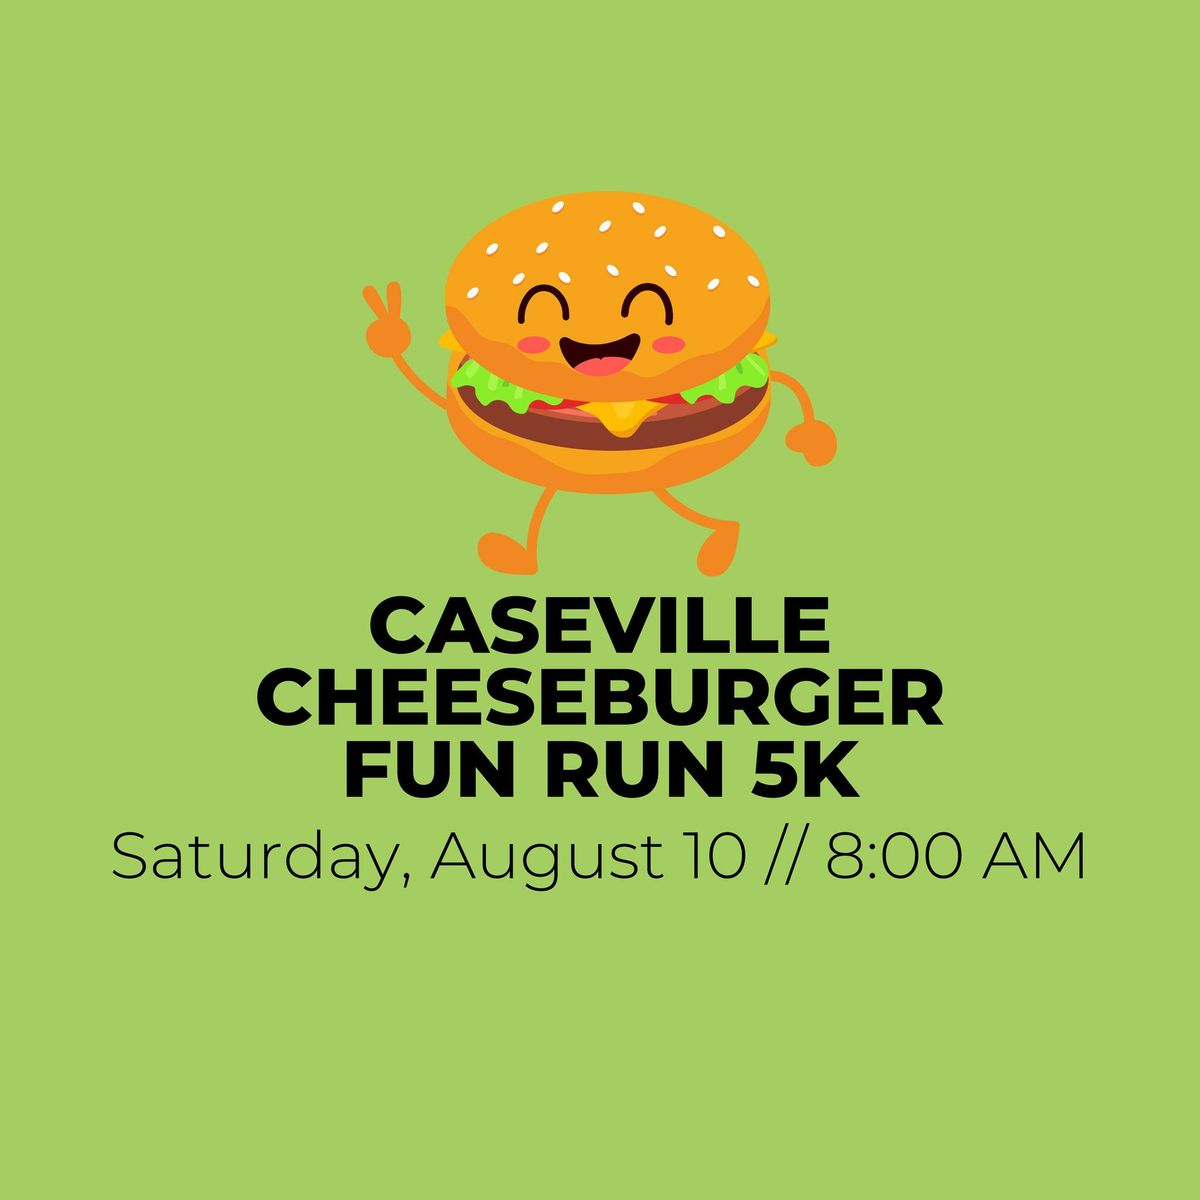 Caseville Cheeseburger Fun Run 5K